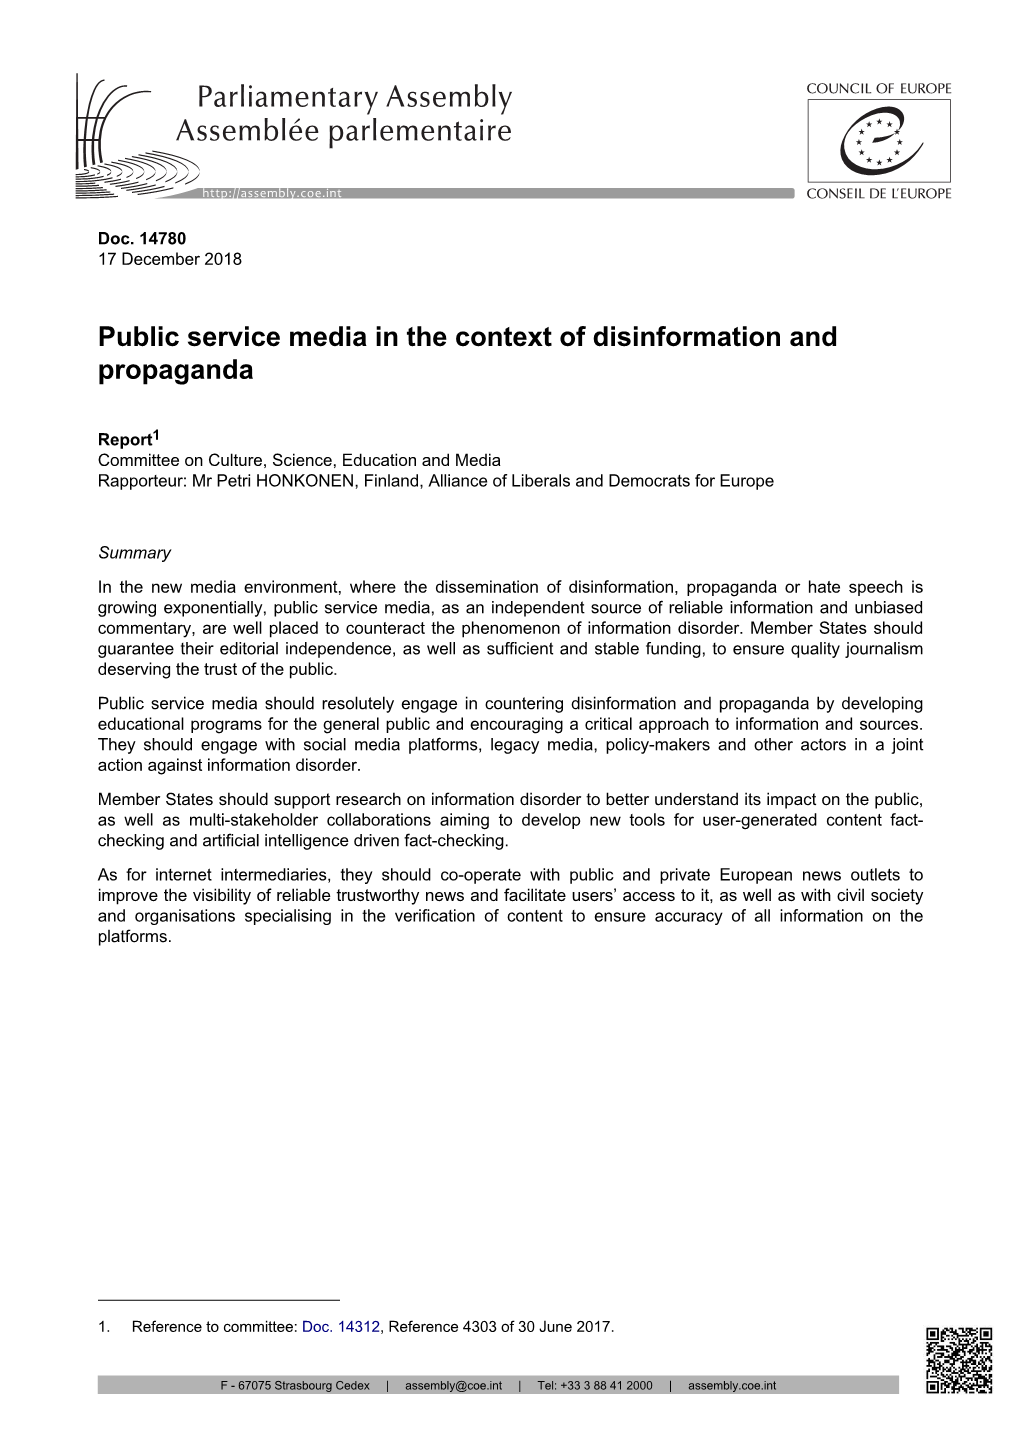 Public Service Media in the Context of Disinformation and Propaganda